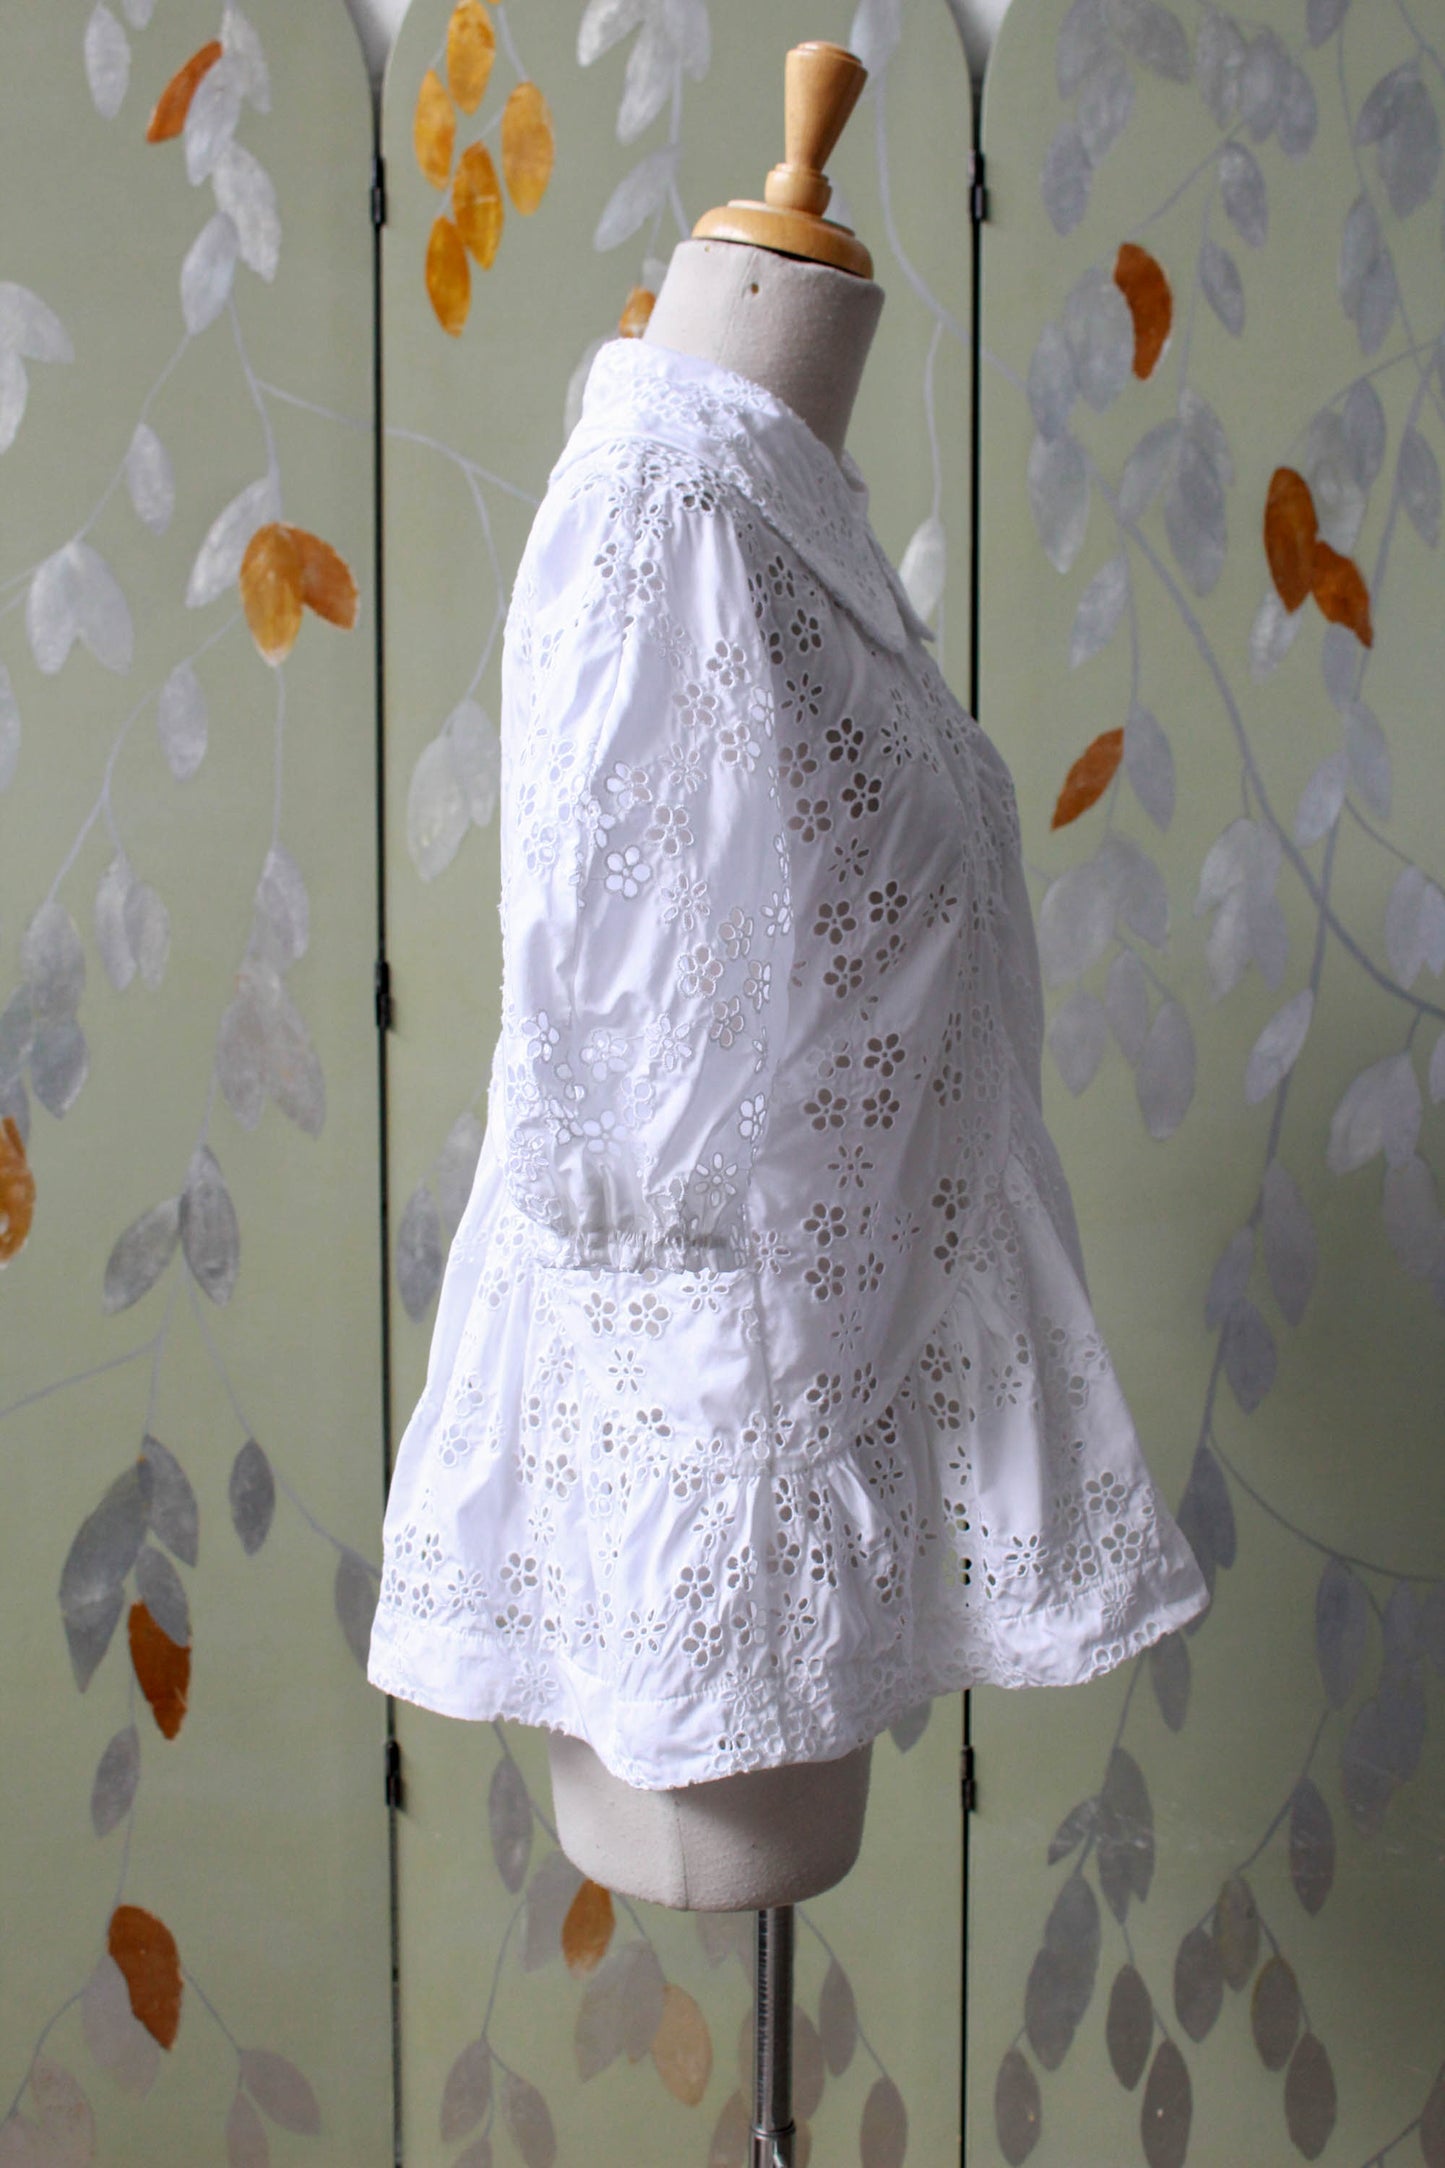 Designer Eyelet Floral Lace Blouse with Peter Pan Collar, Medium